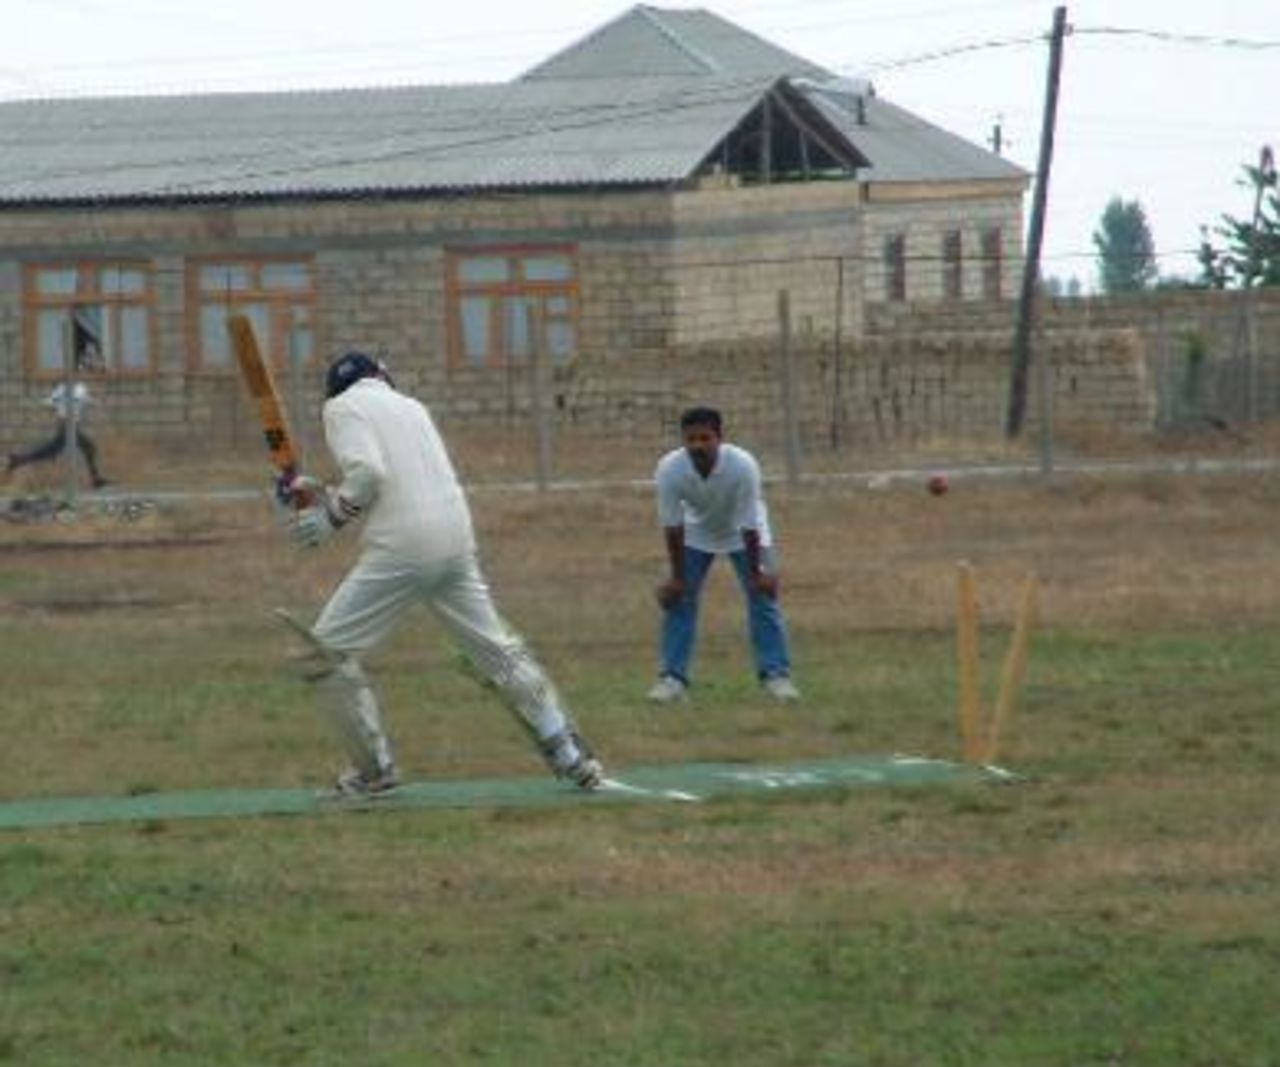 Cricket comes to Quba